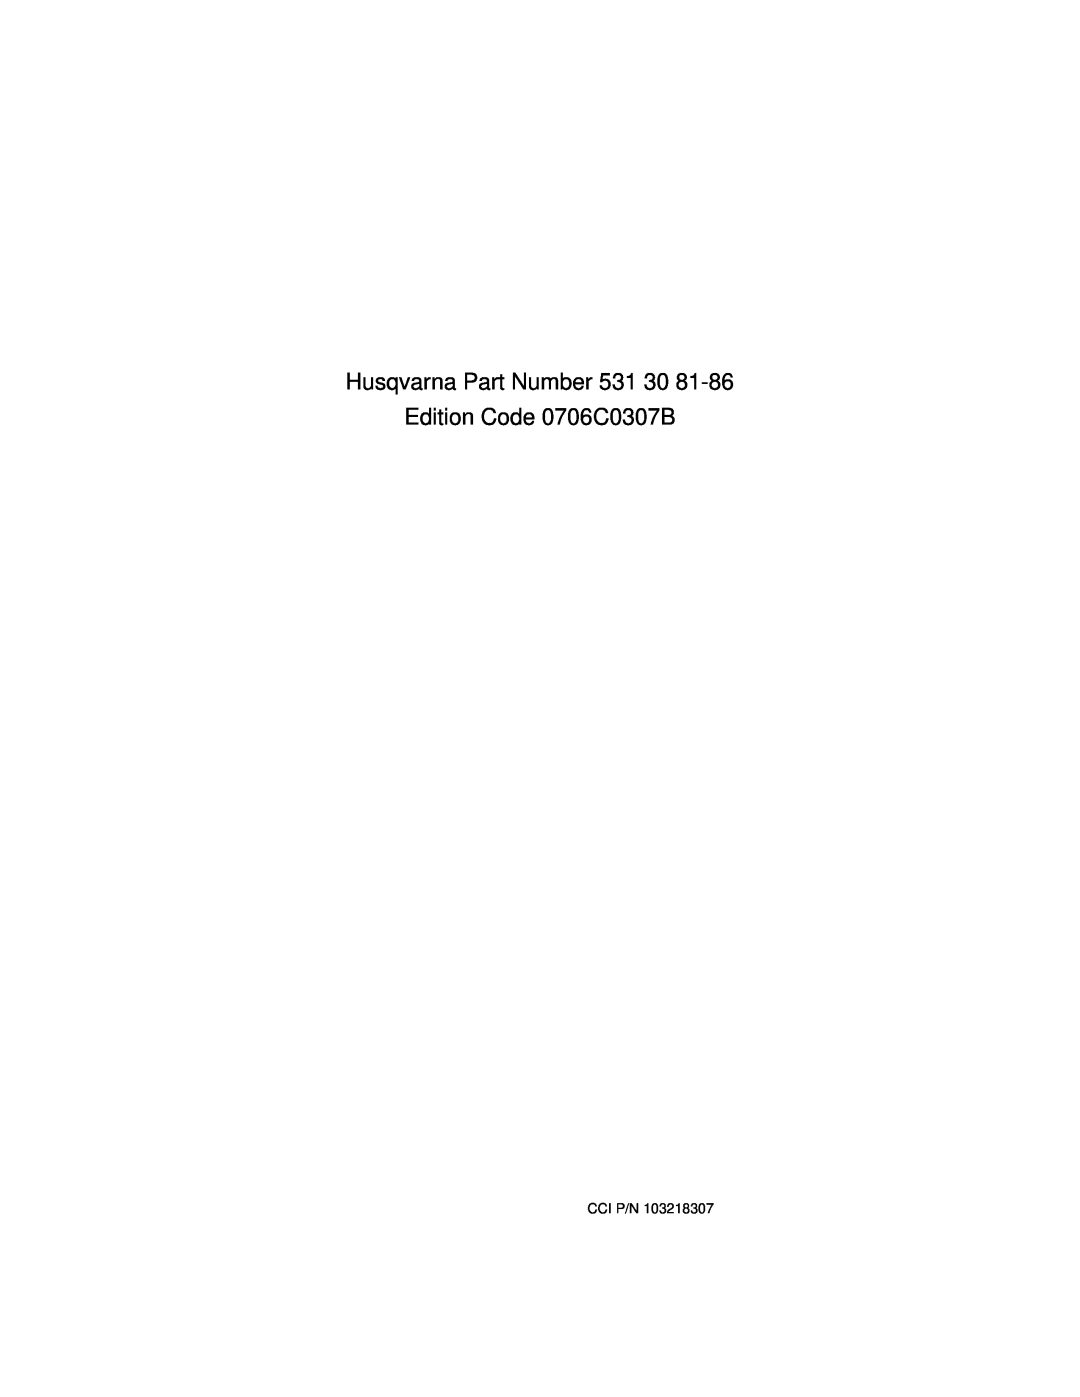 Husqvarna HUV 4421-G / GXP, HUV 4421-D / DXP owner manual Husqvarna Part Number 531 30, Edition Code 0706C0307B, Cci P/N 